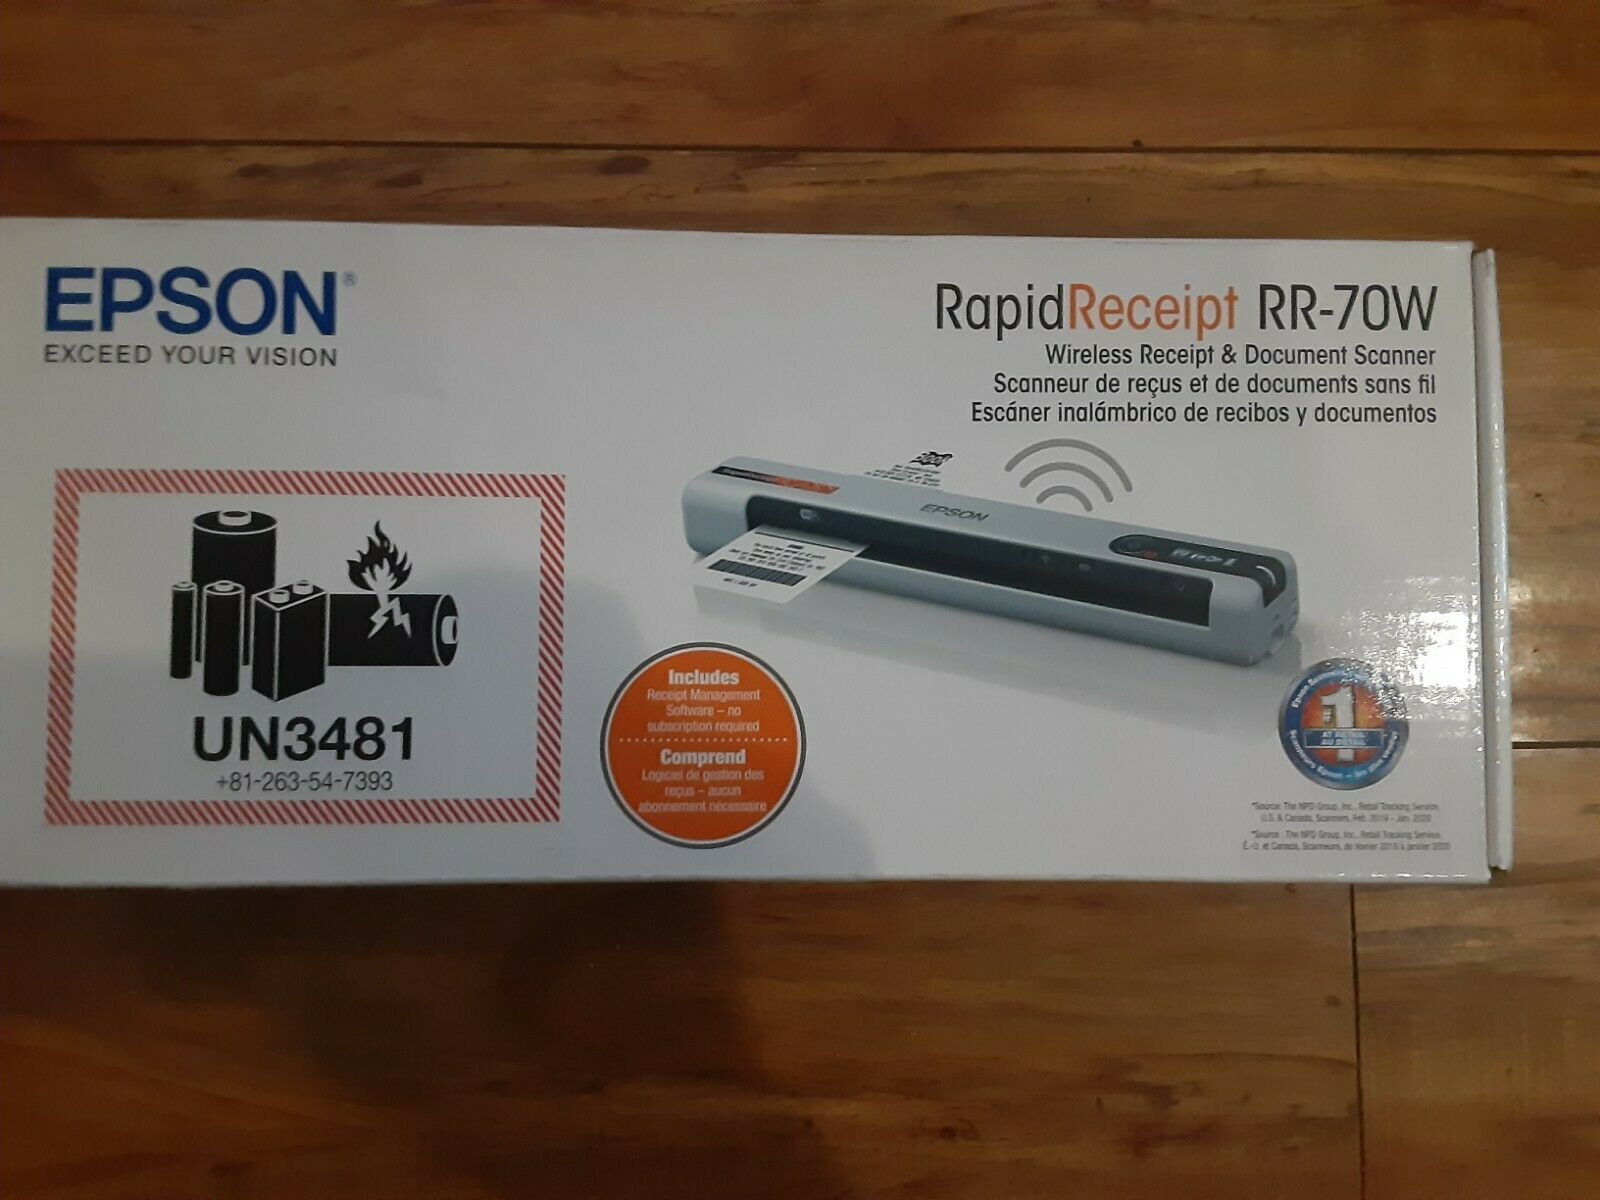 EPSON RAPID RECEIPT RR-70W WIRELESS RECEIPT & DOCUMENT SCANNER BRAND NEW IN BOX